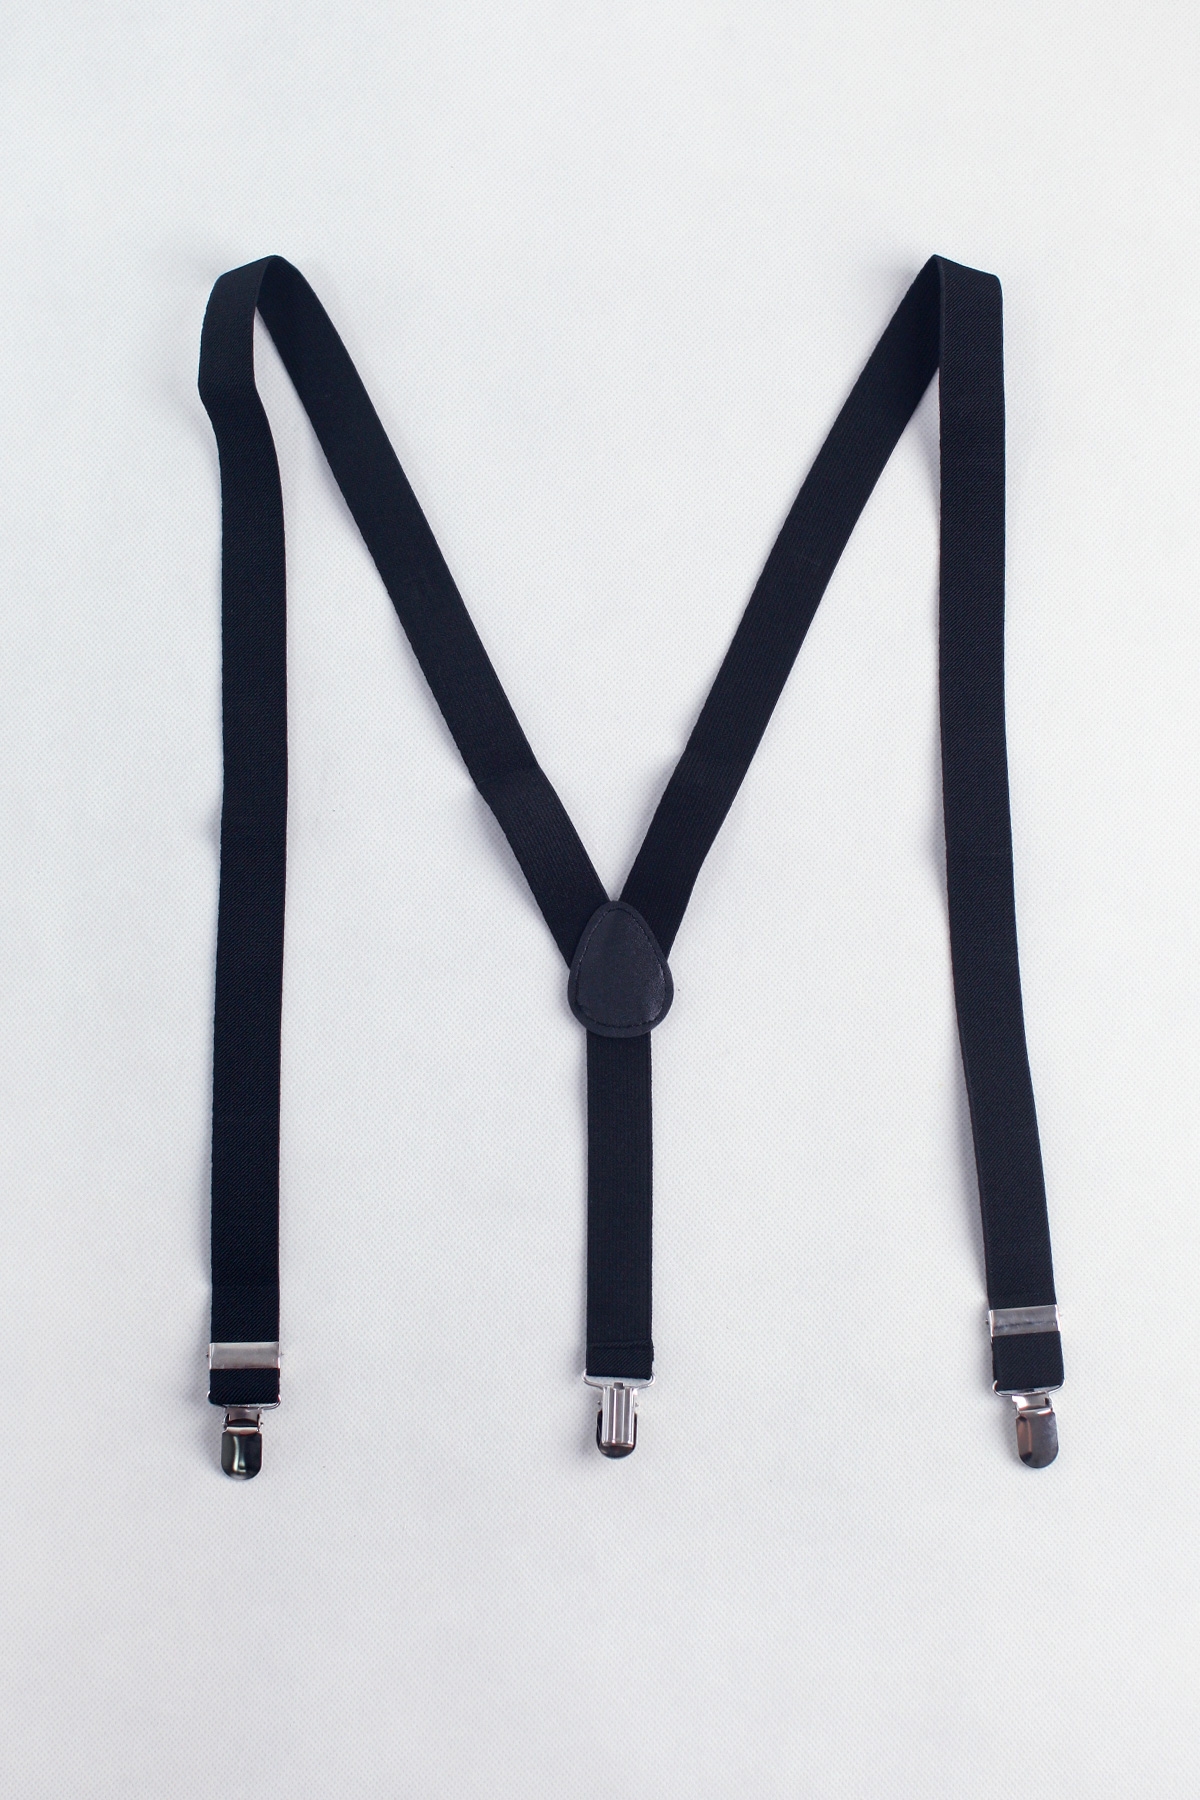 Men's Elastic Suspenders in Black